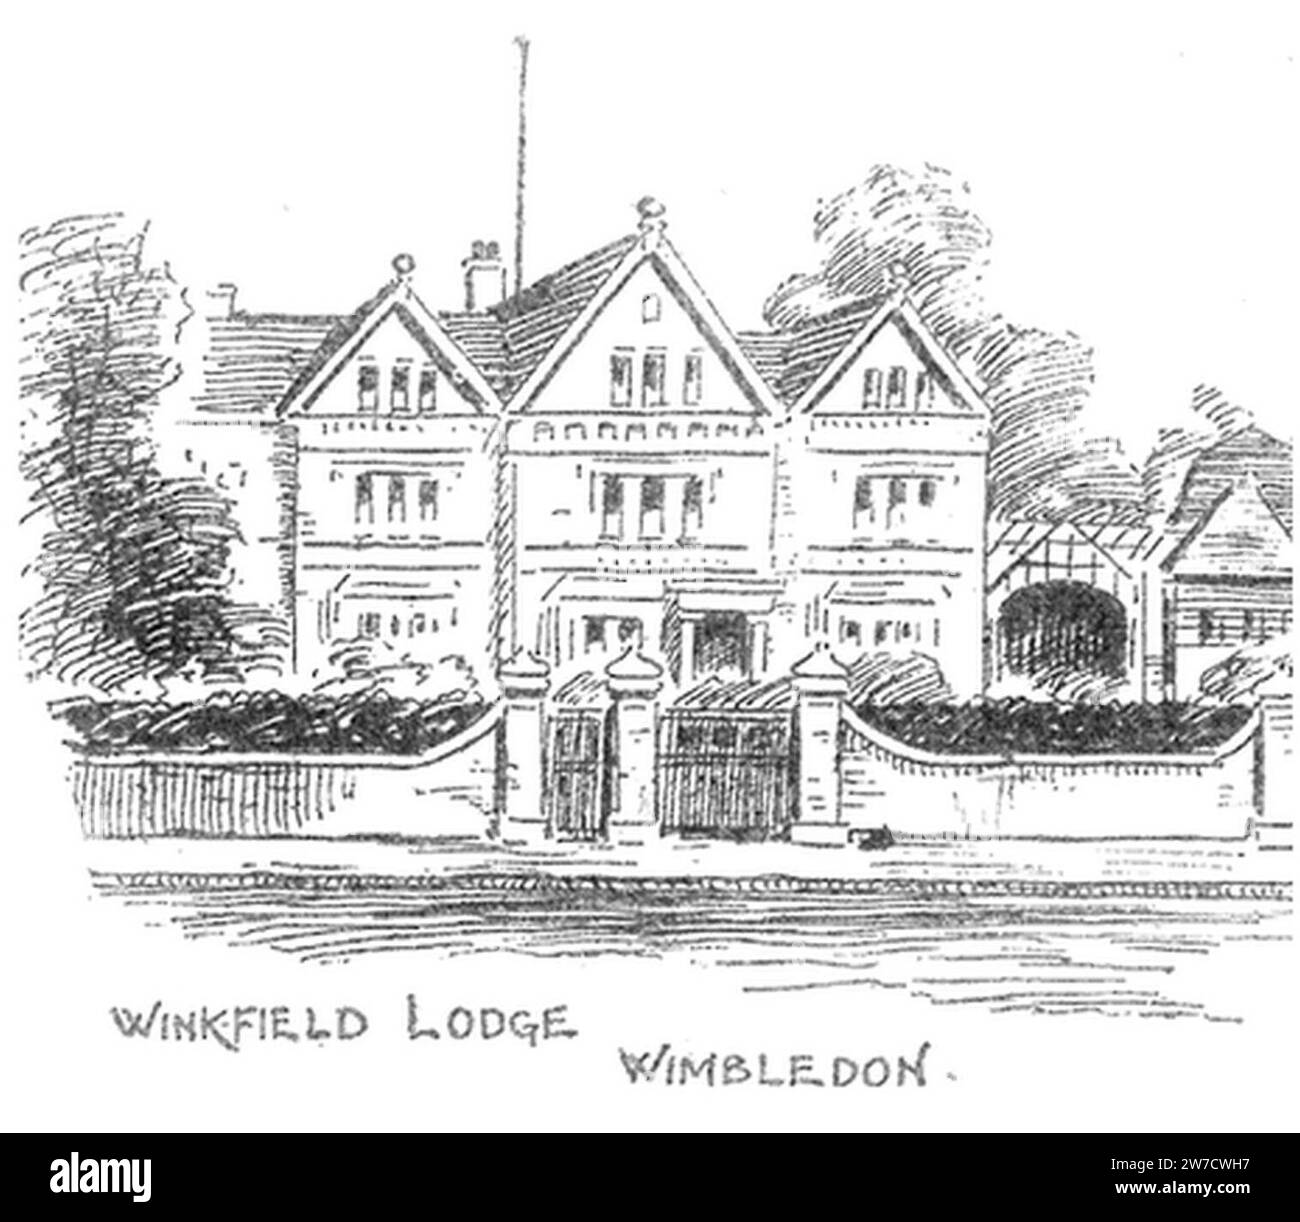 Winkfield Lodge, Wimbledon, c. 1917. Stock Photo